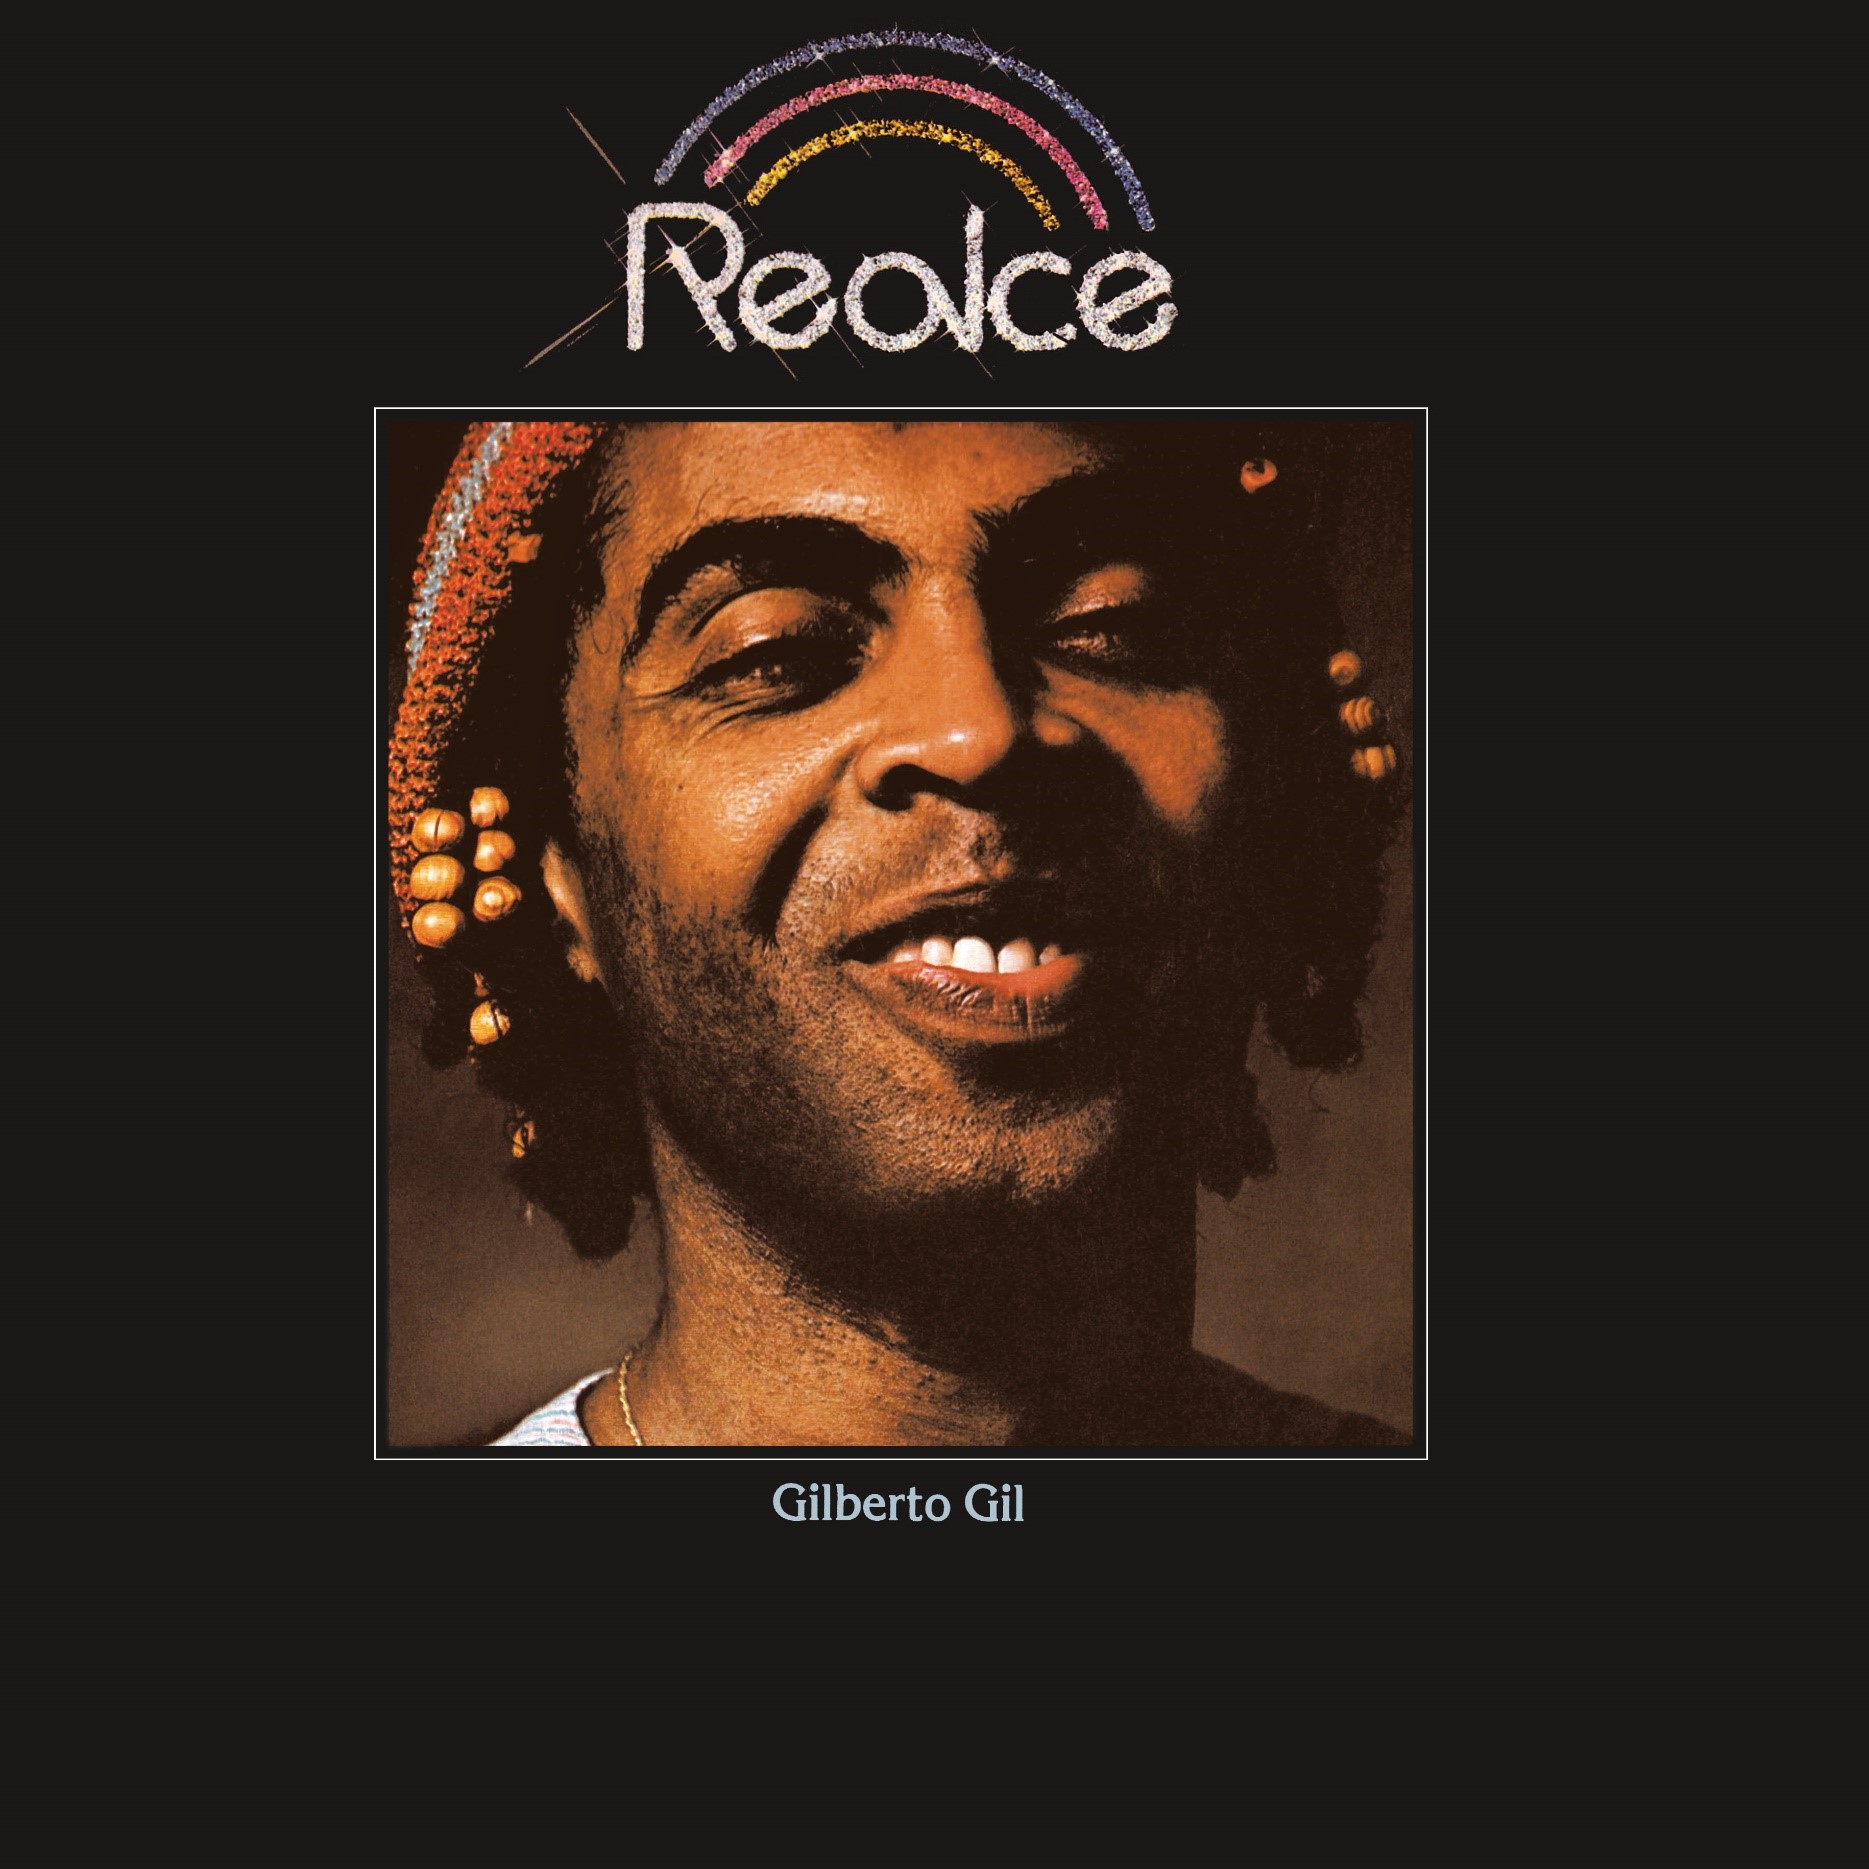 [Monkeybuzz] Resenha: Gilberto Gil – Realce